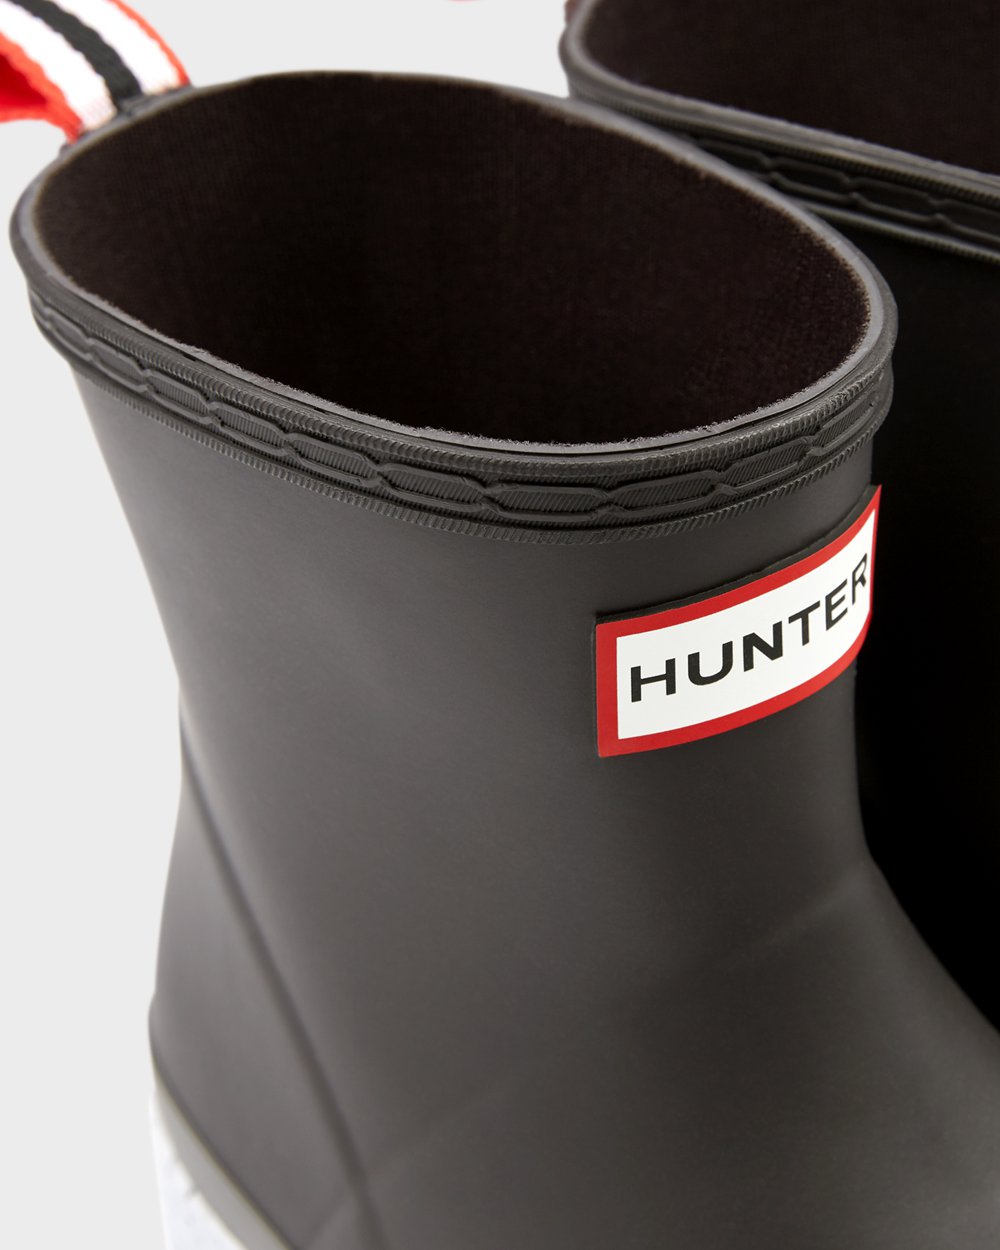 Womens Play Boots - Hunter Original Short Speckle Rain (85UBXDKYG) - Black/Grey